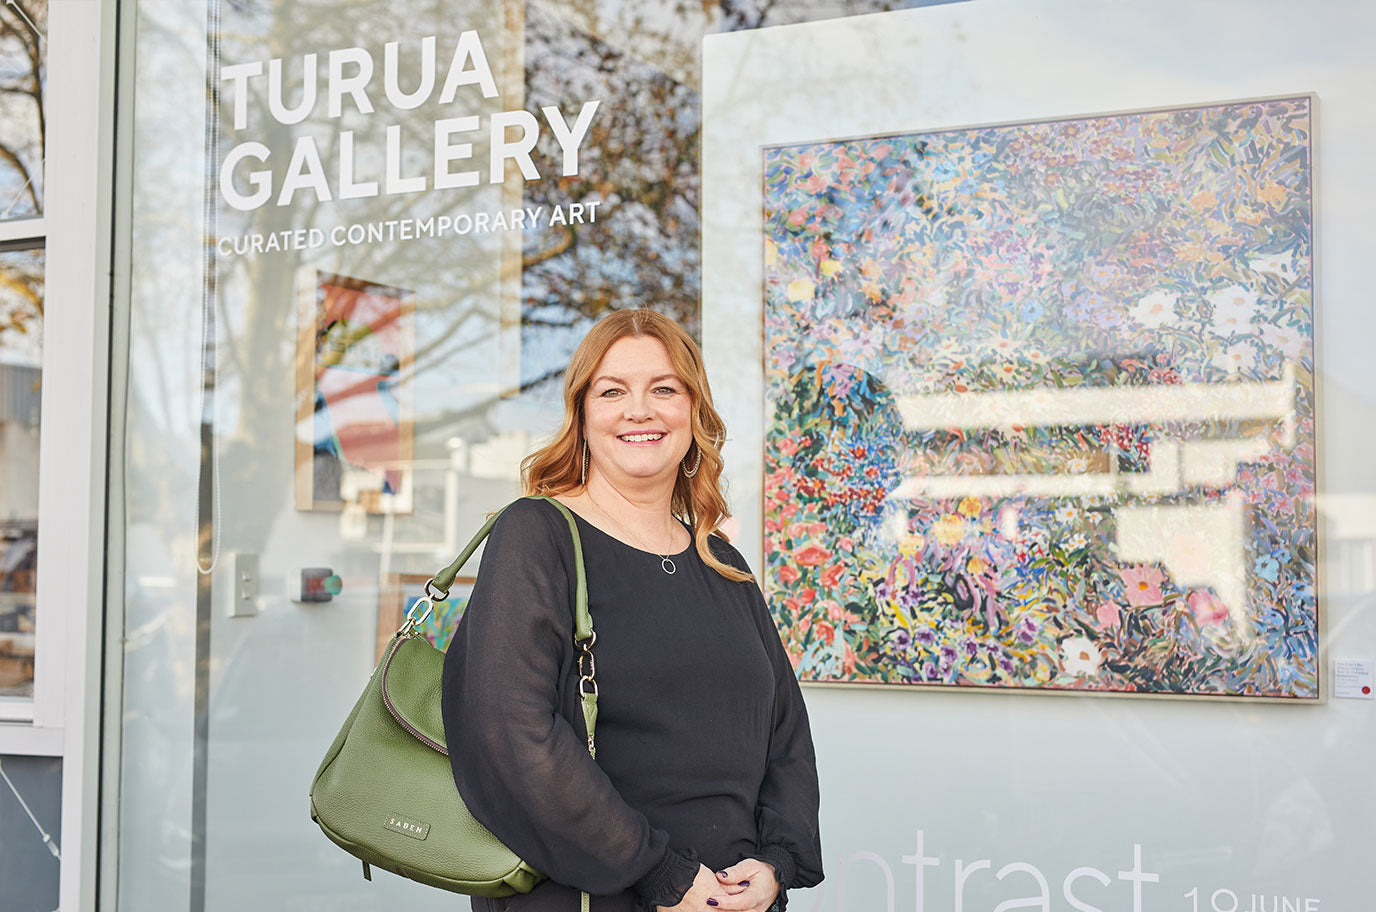 melissa from turua gallery standing in front of carmel van der hoeven painting with Saben handbag in ivy green